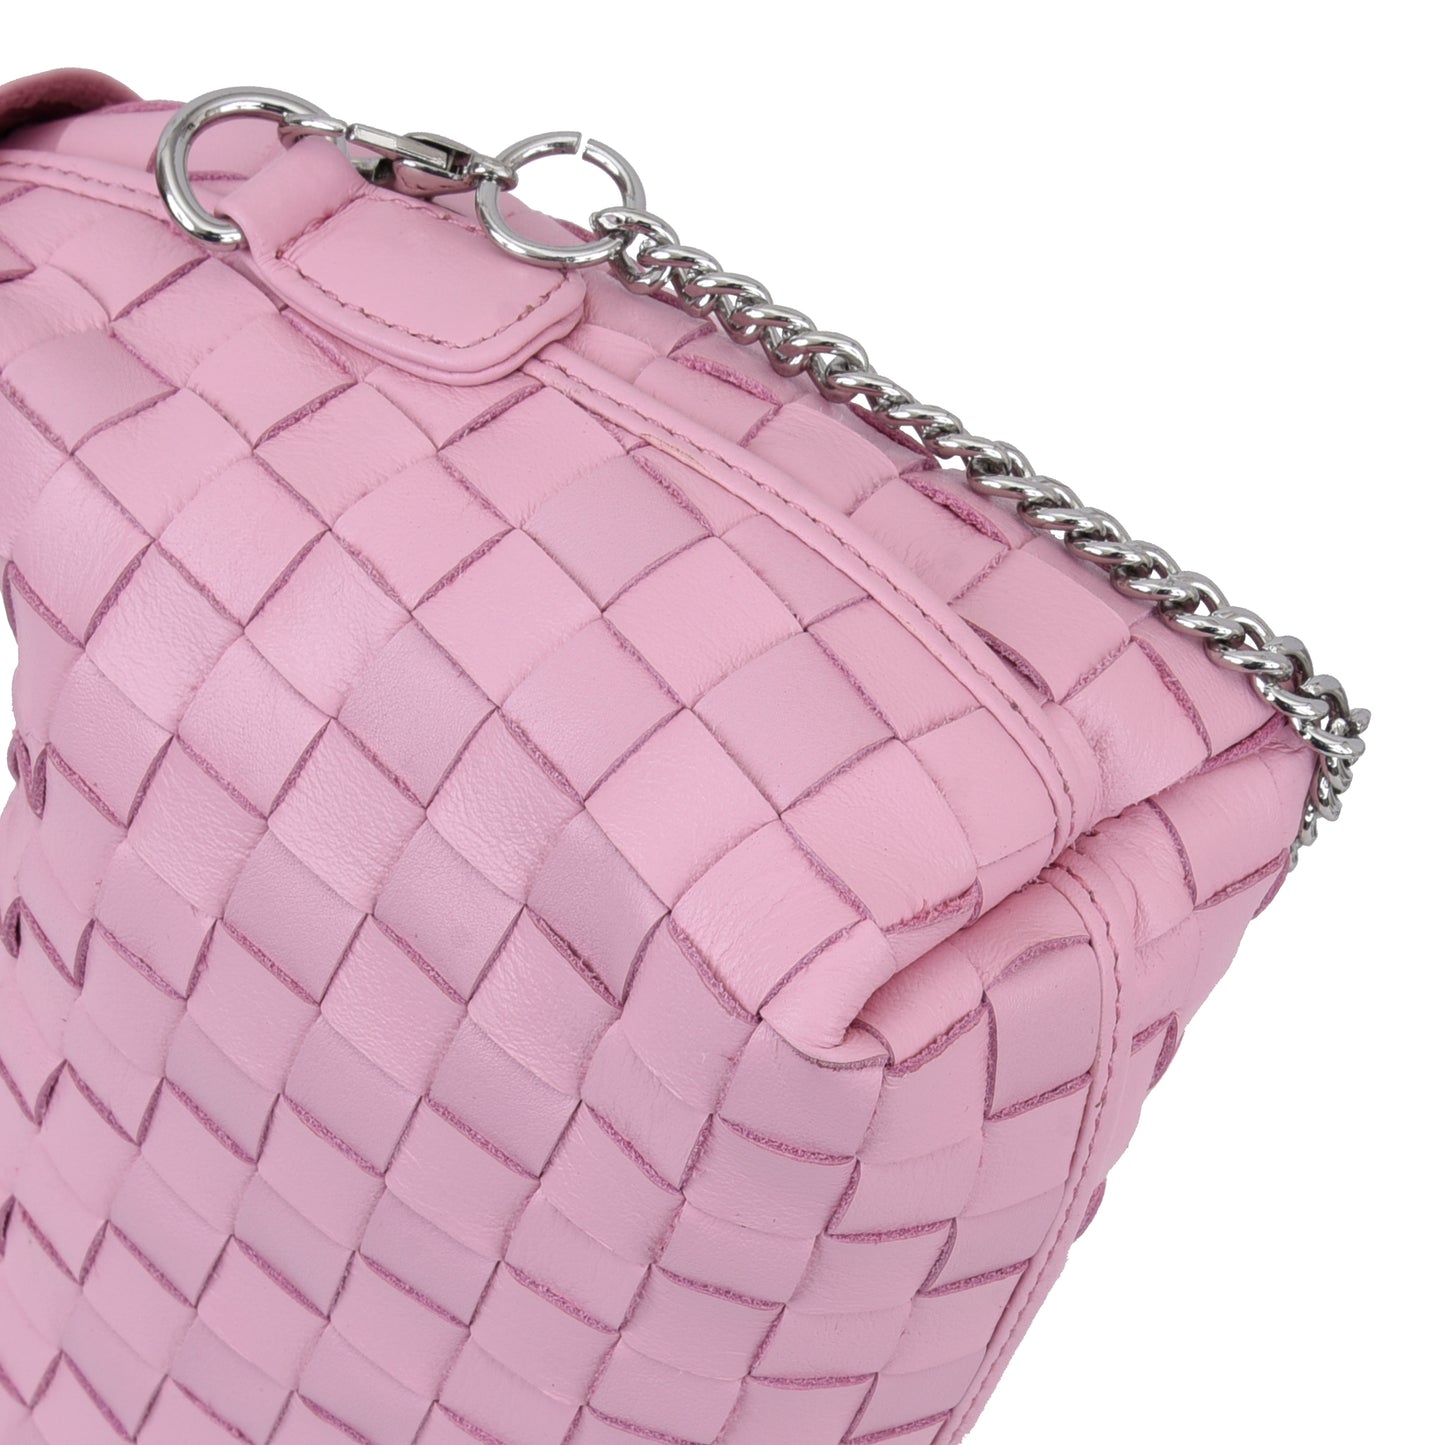 Núnoo Mini Dandy braided Silky Light Pink Evening bags Light pink